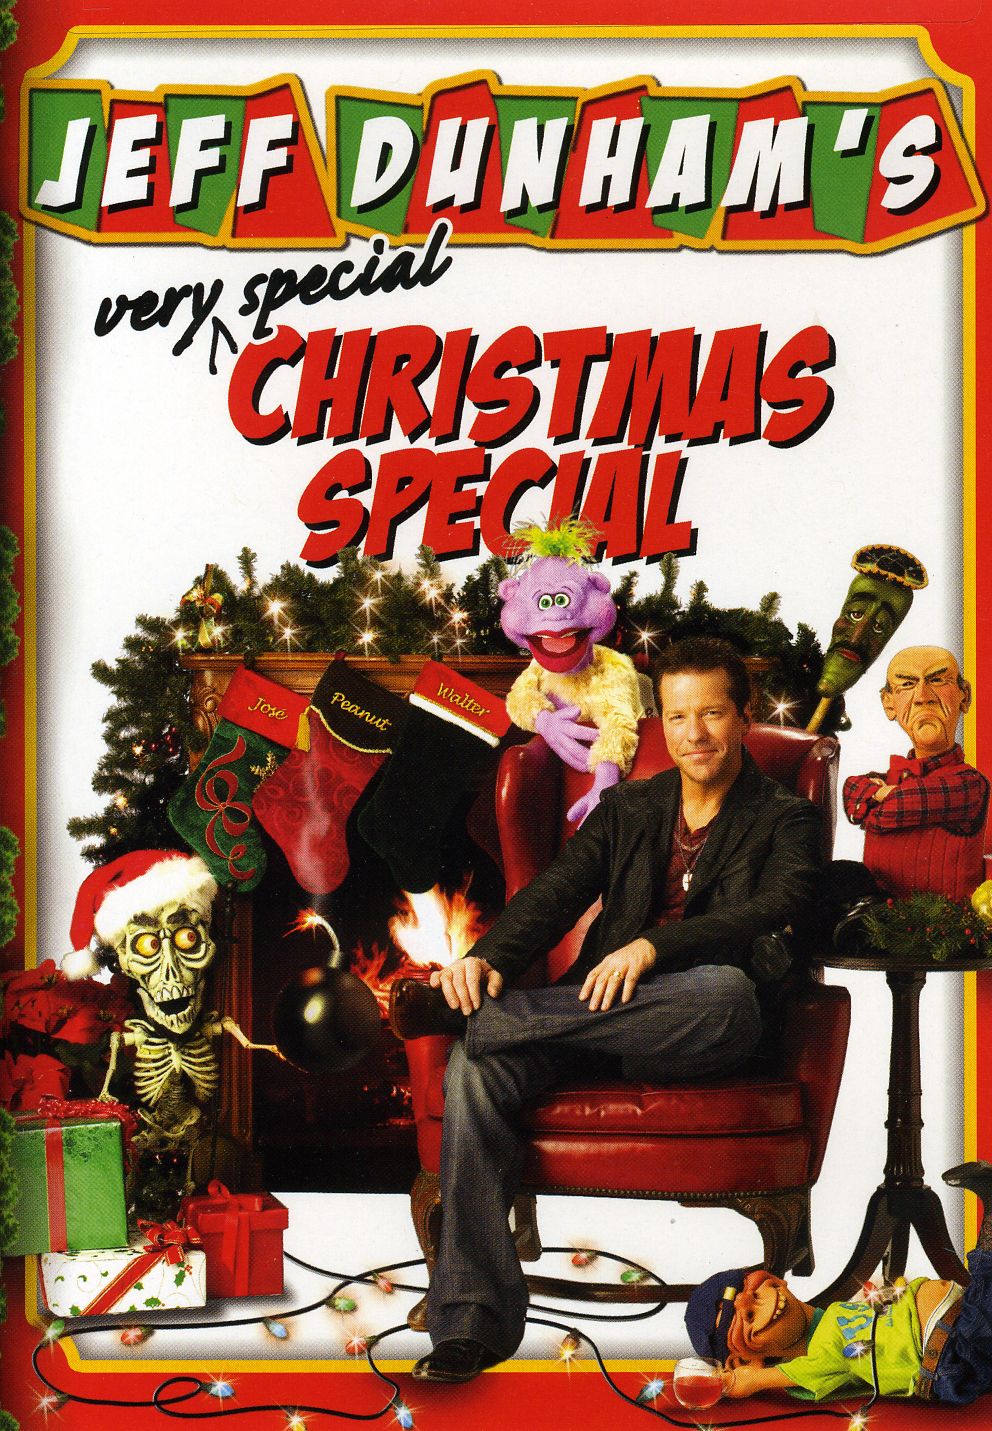 Jeff Dunham's Very Special Christmas Special DVD Review